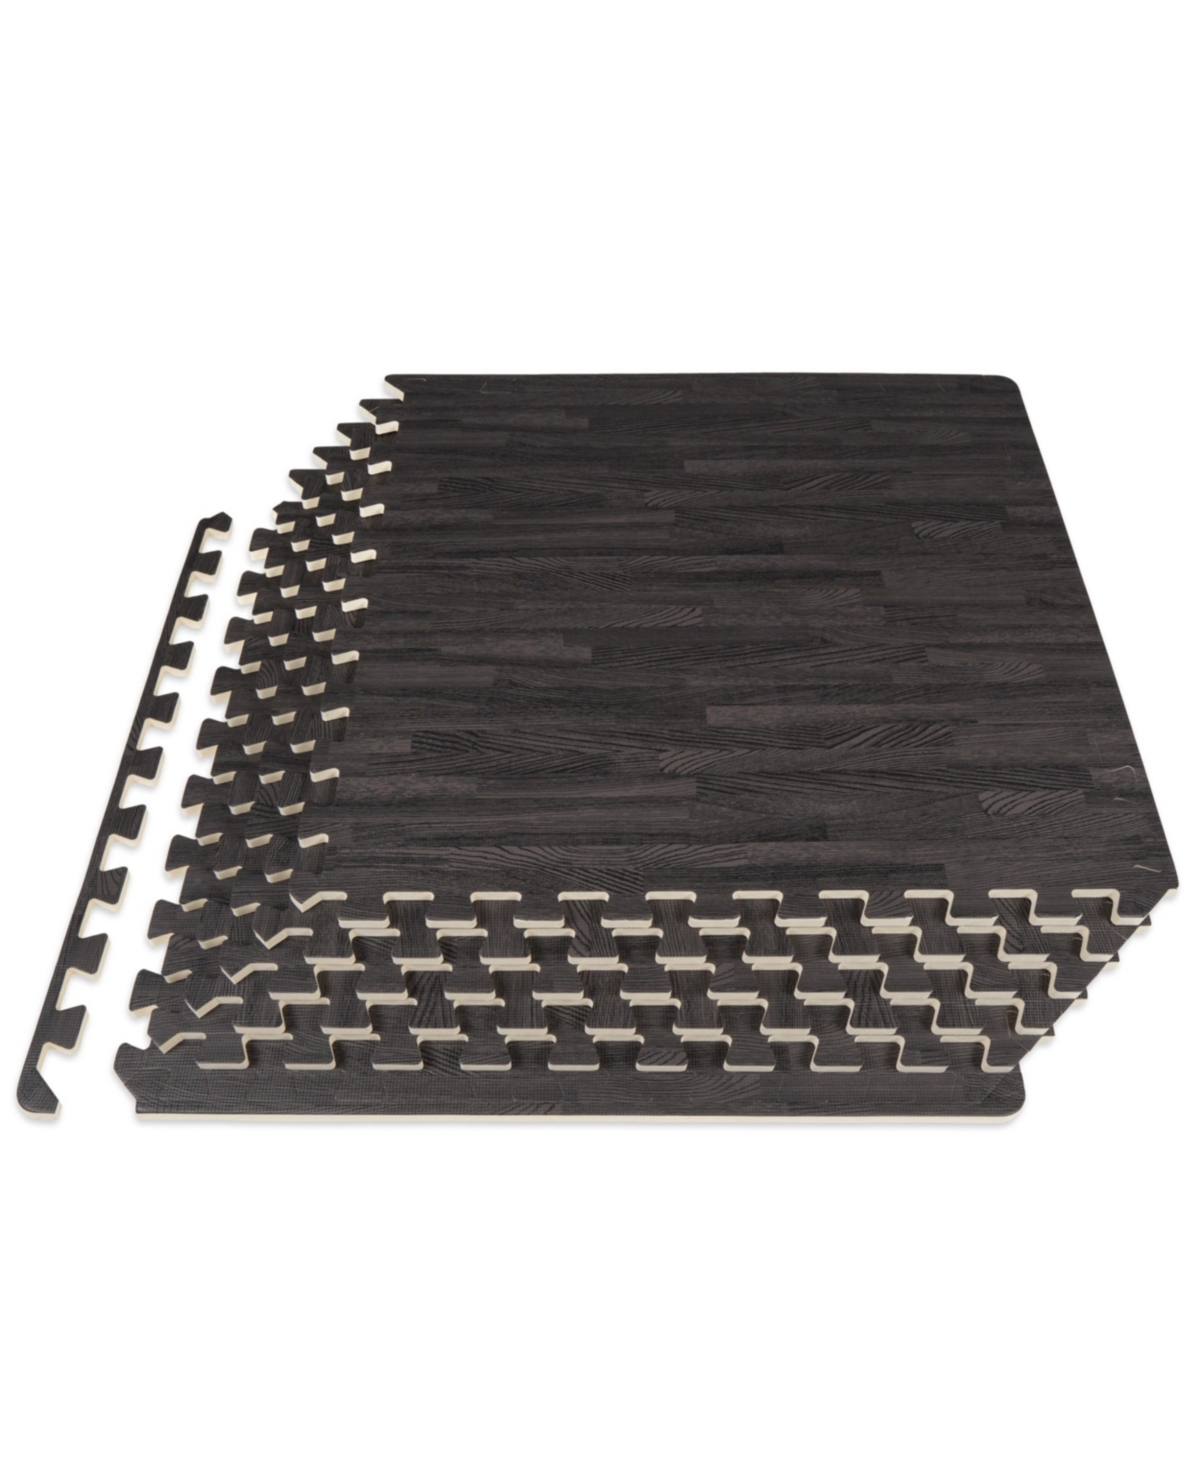 Wood Grain Puzzle Mat 1/2-in, 24 Sq Ft - 6 Tiles - Dark walnut